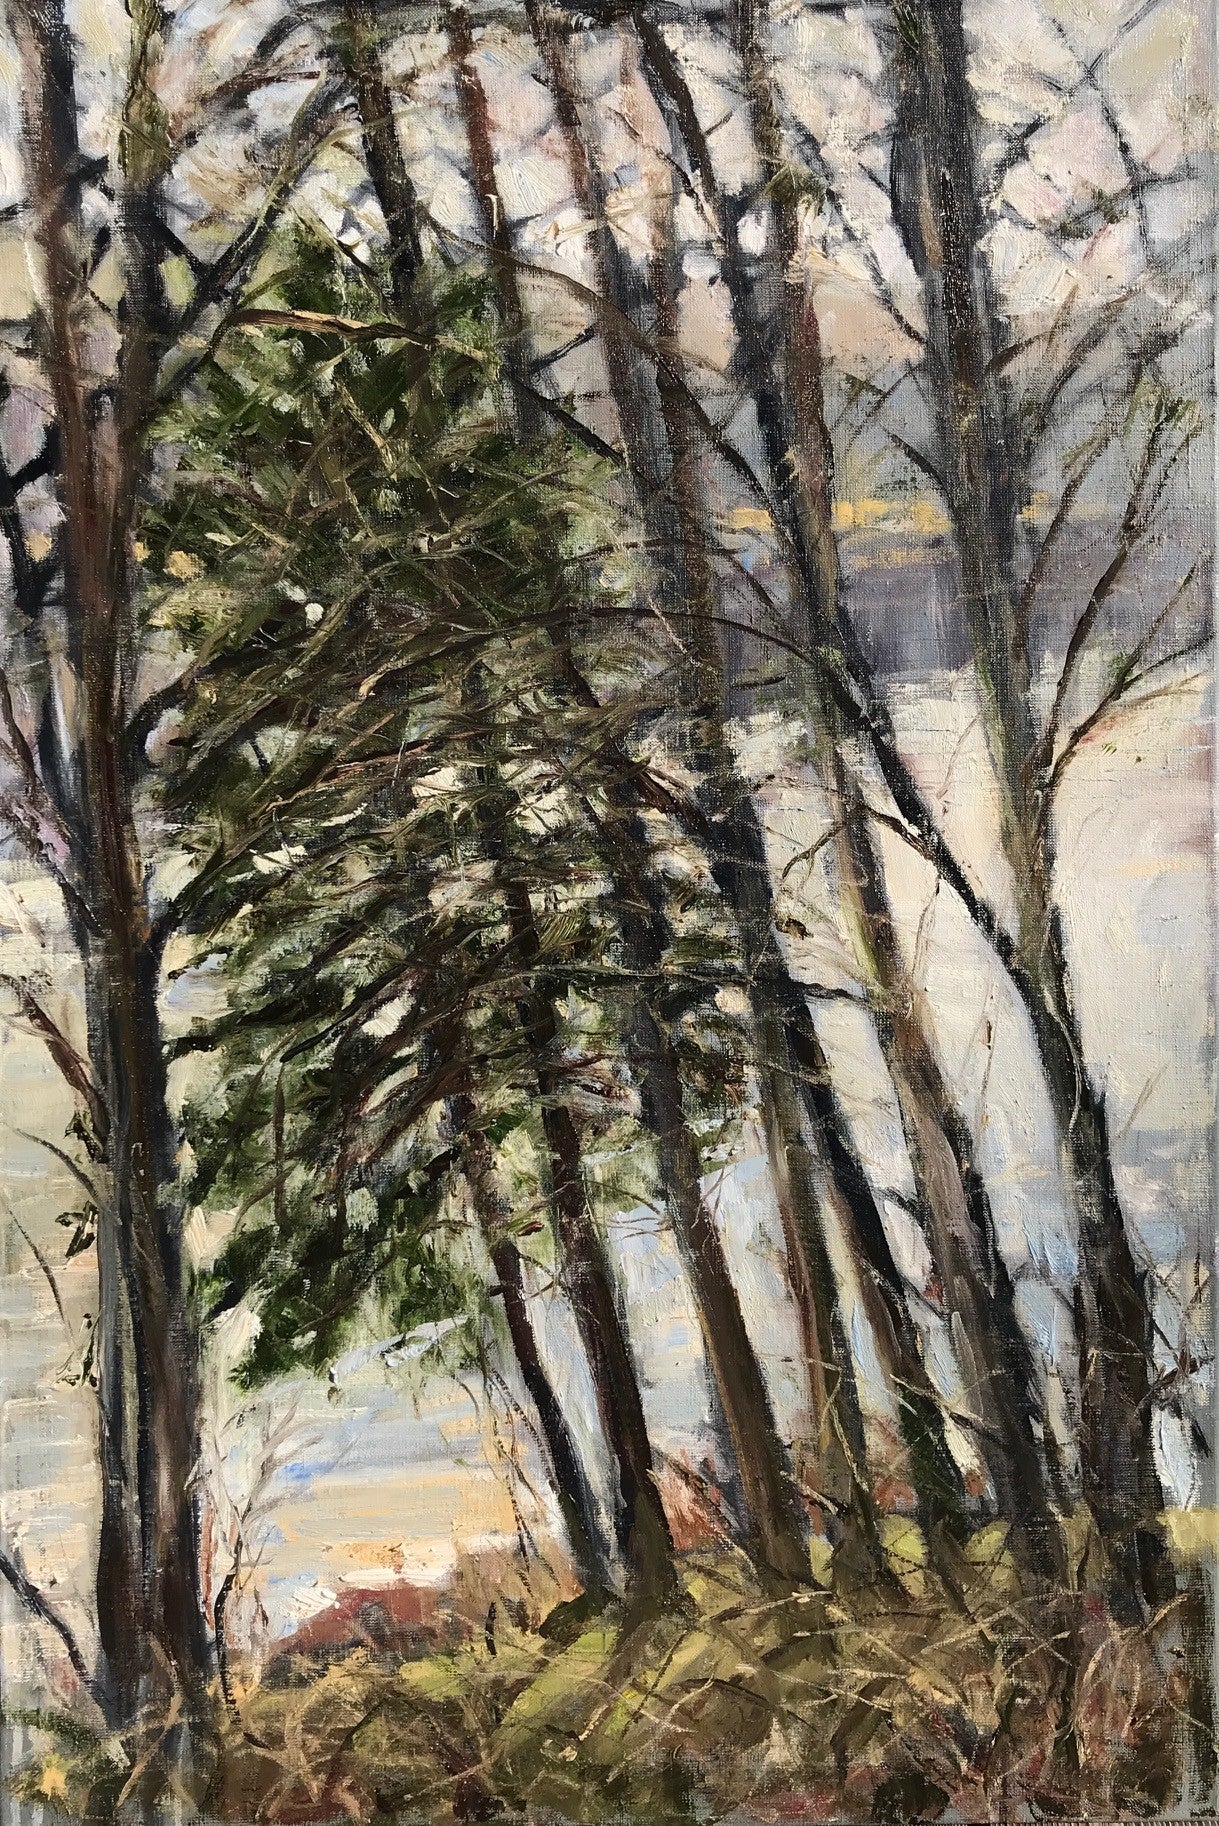 Upton Lake through the Trees, December 28th, 2021